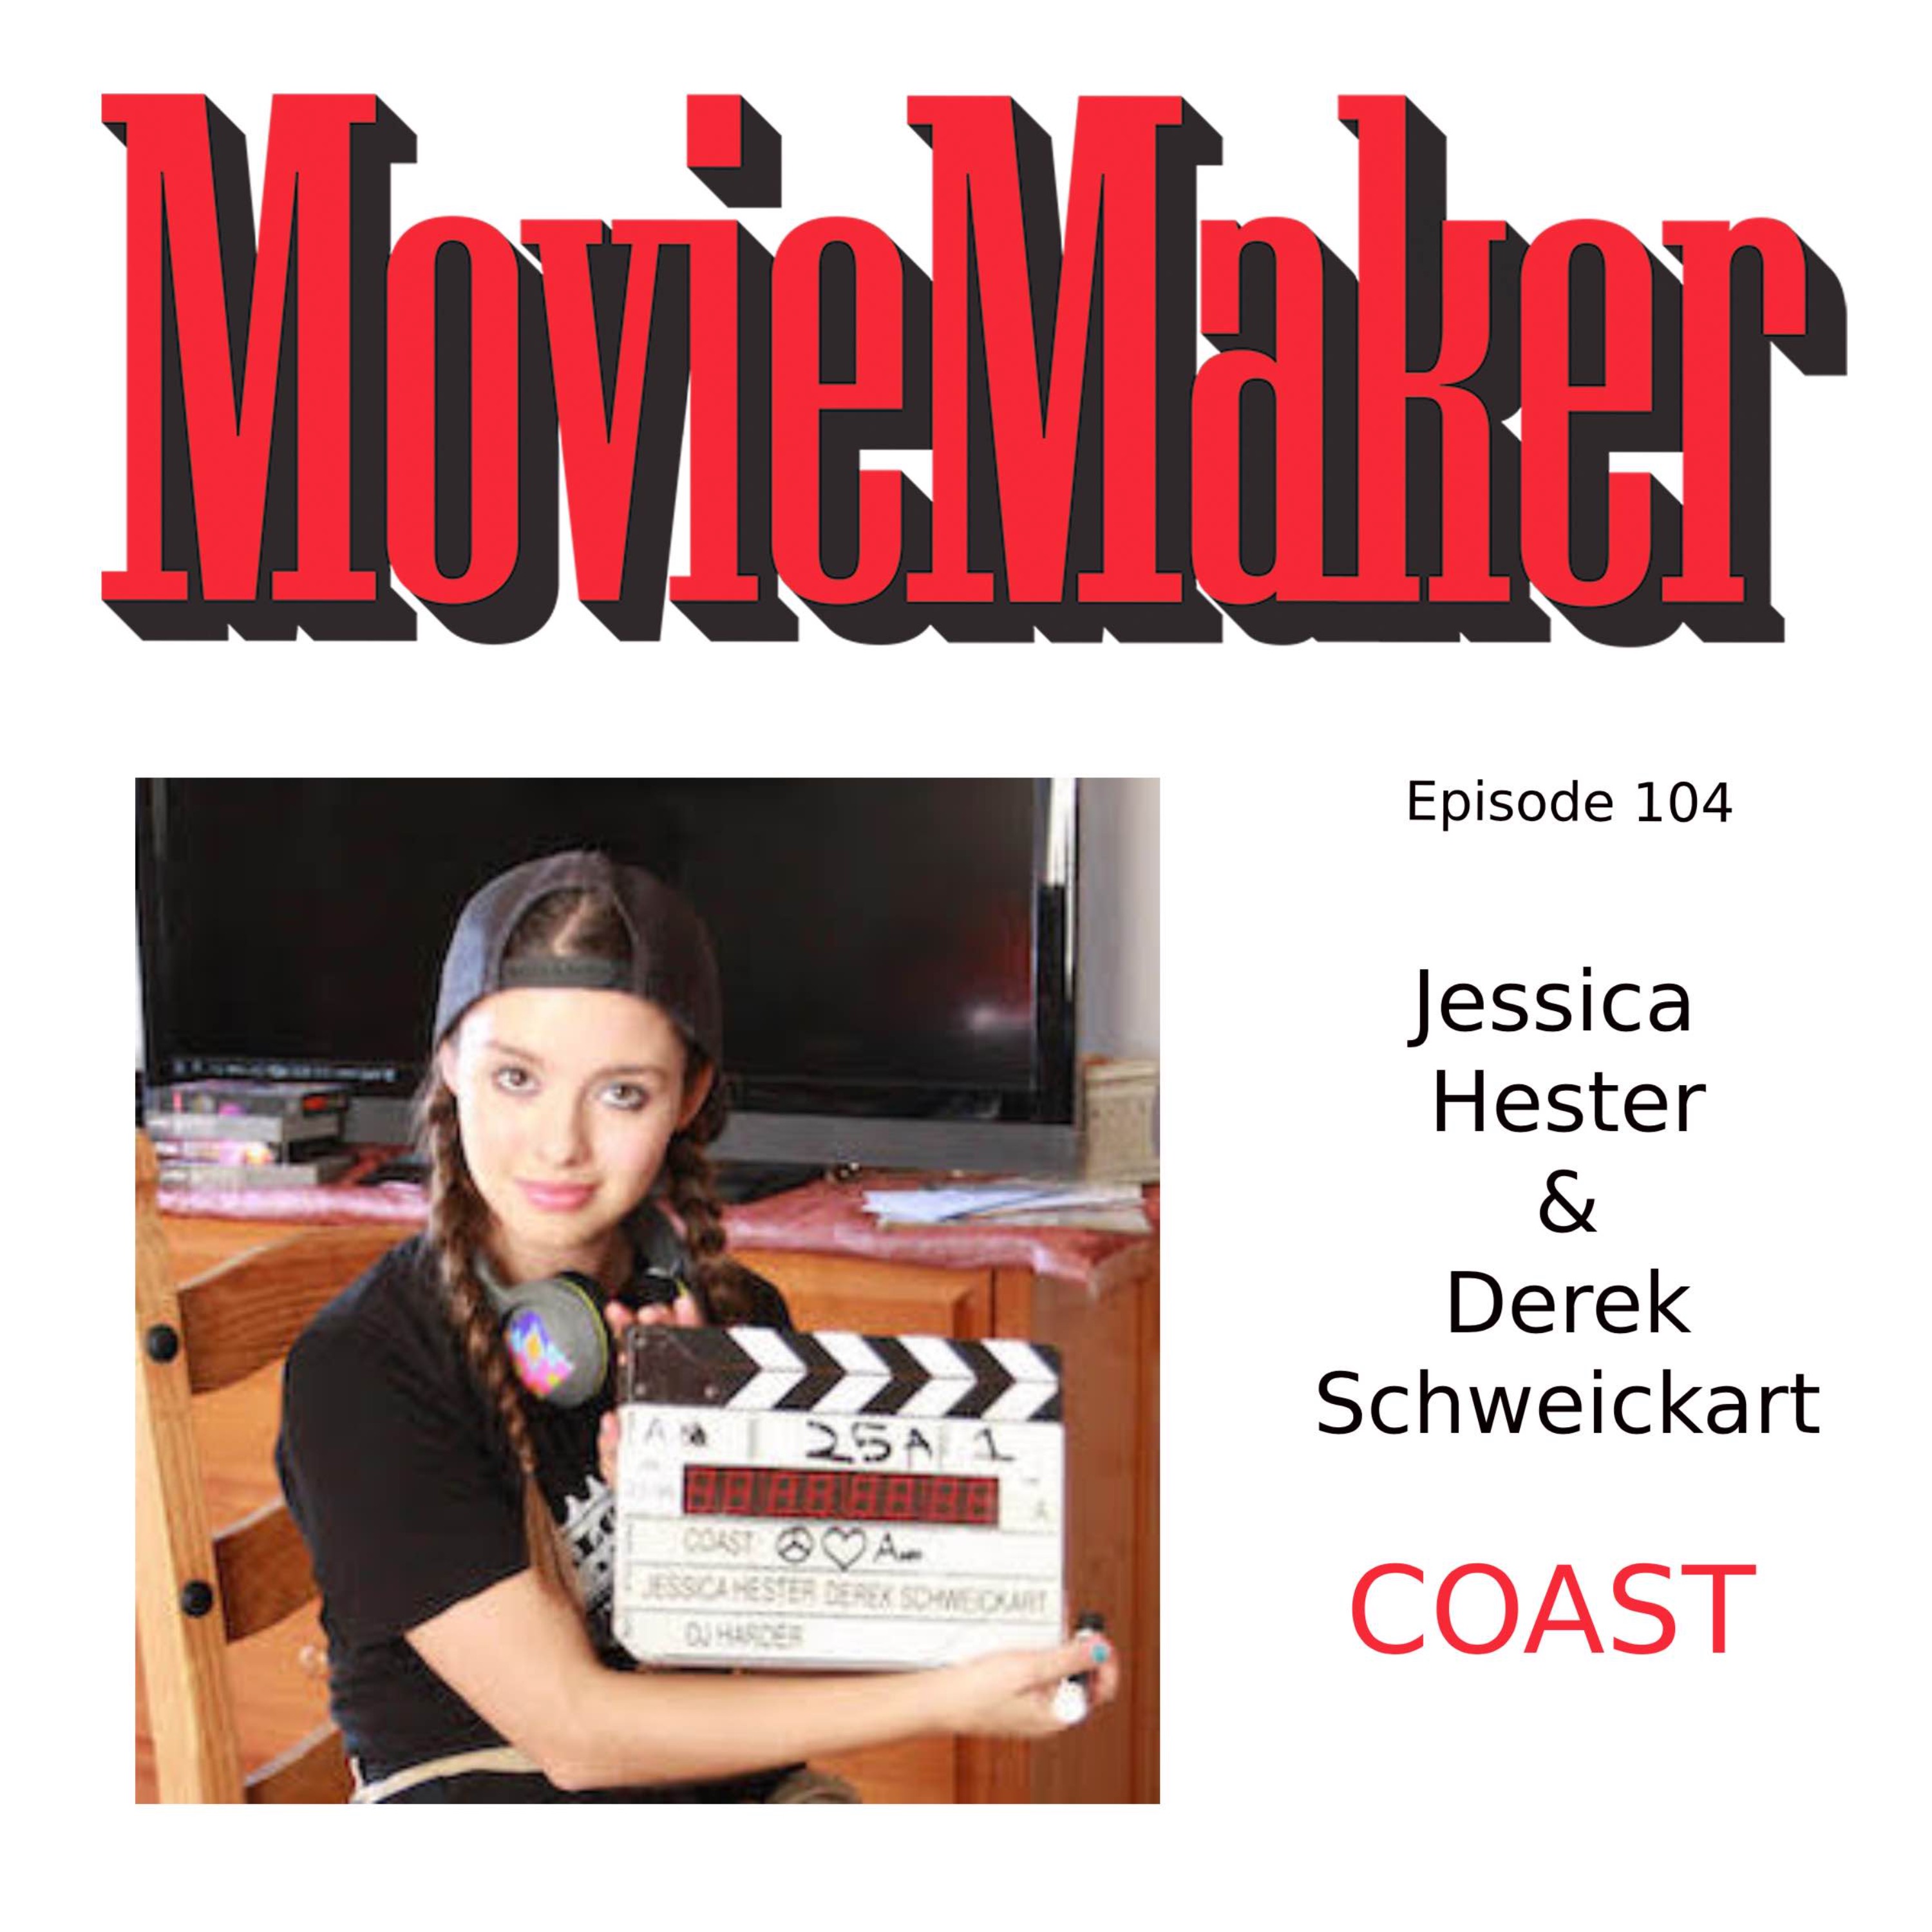 Jessica Hester and Derek Schweickart (COAST)